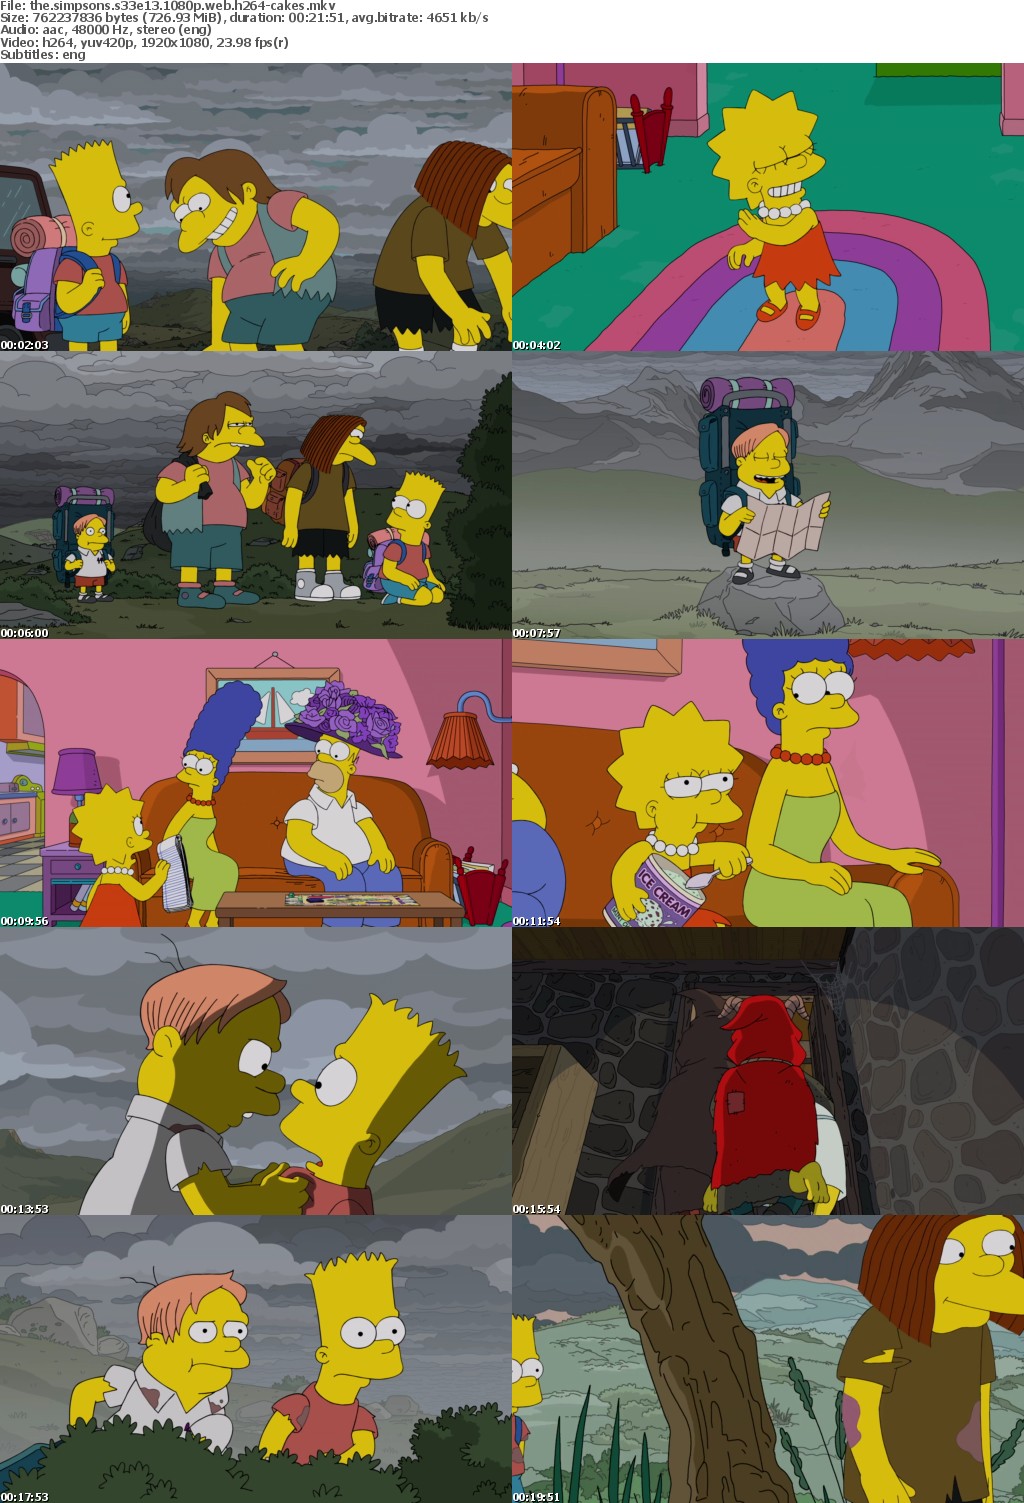 The Simpsons S33E13 1080p WEB H264-CAKES